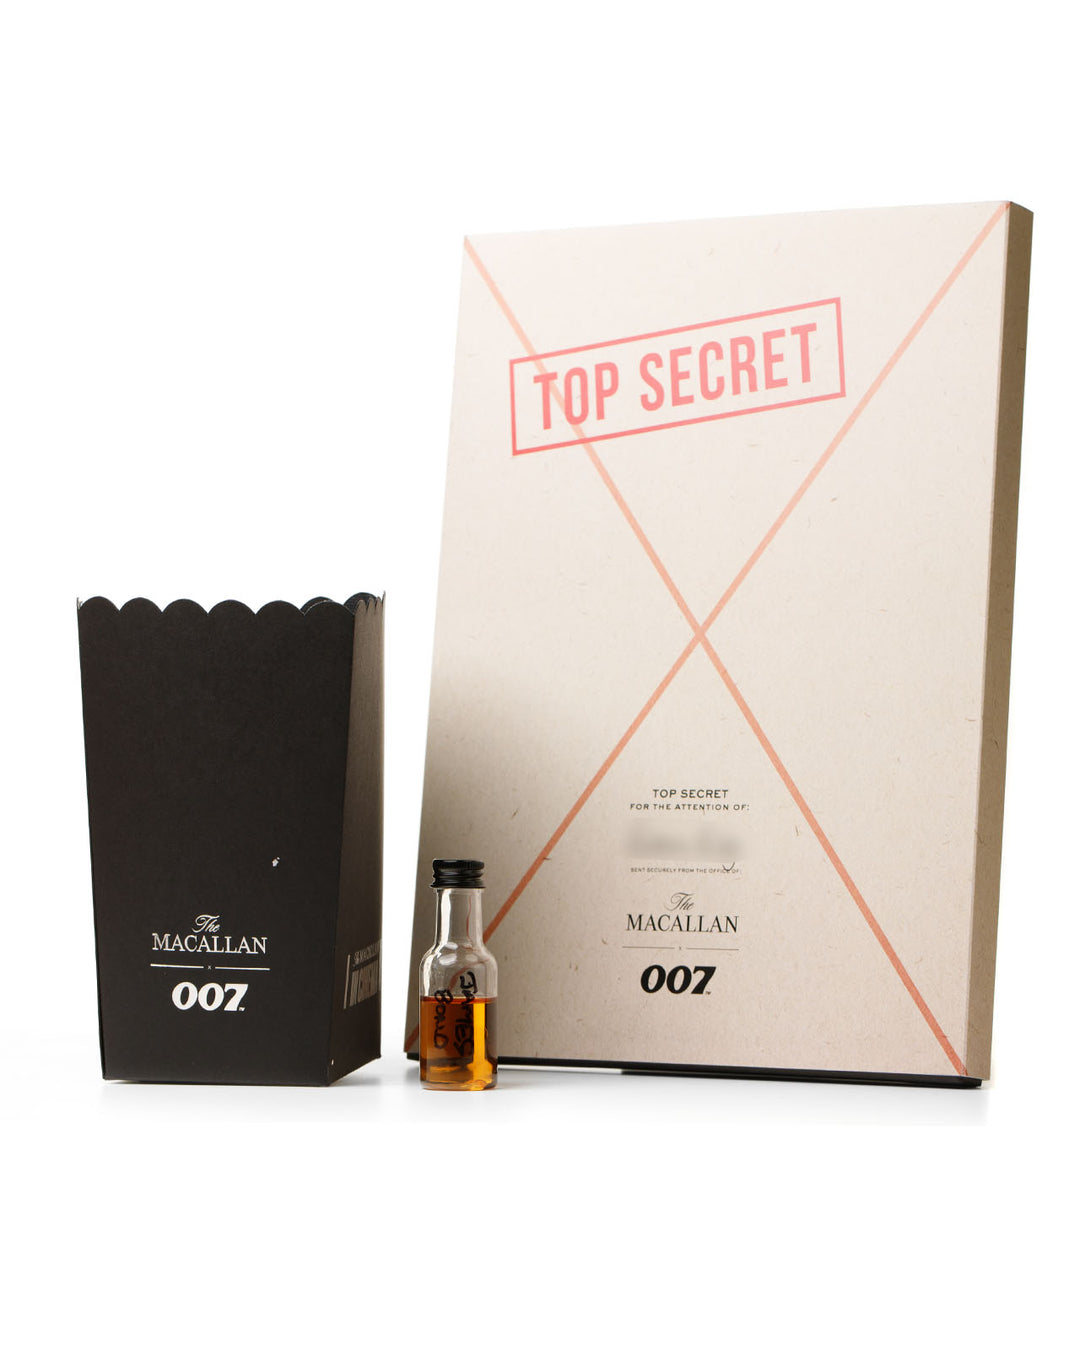 Macallan James Bond 60th Anniversary In Cinema 007 Popcorn Box, Macallan Sample, & 'Top Secret' File Containing A Skyfall Lodge Print